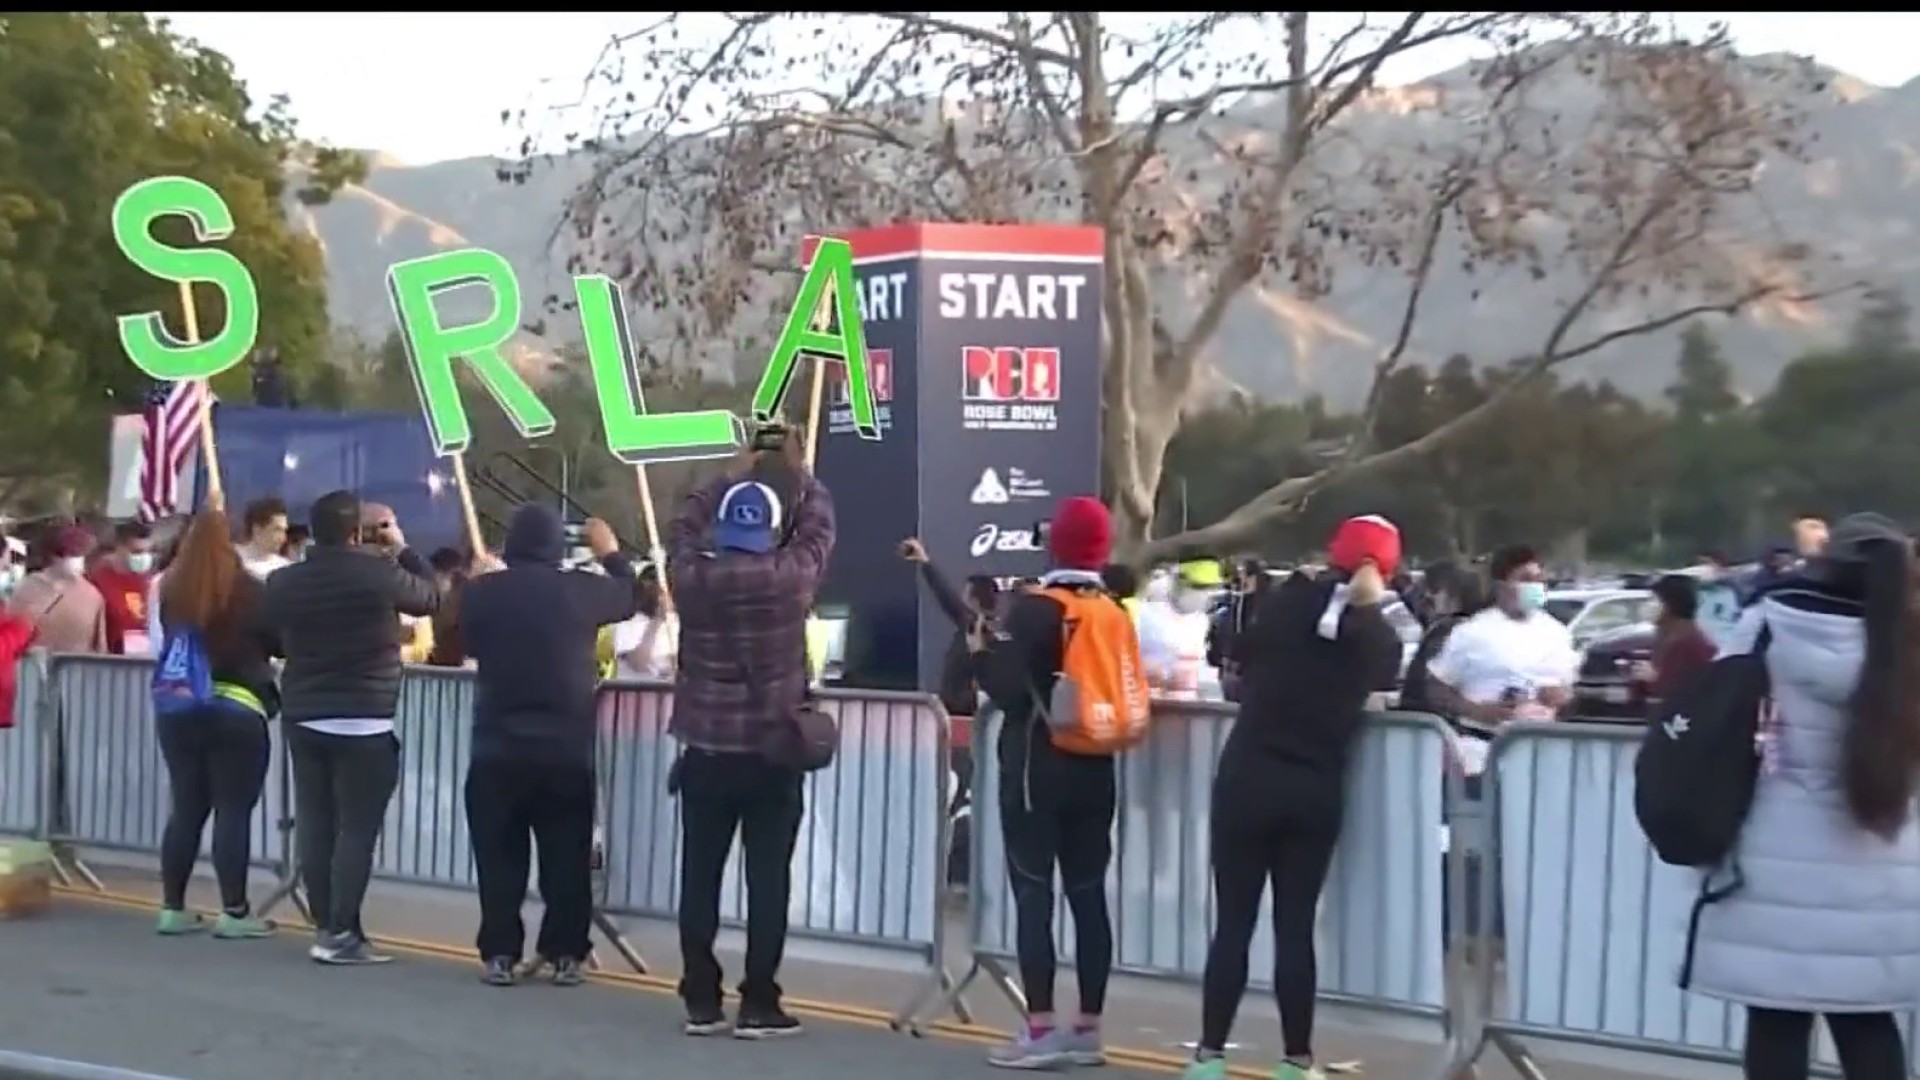 LA Marathon Comes Through Beverly Hills - Beverly Hills Courier